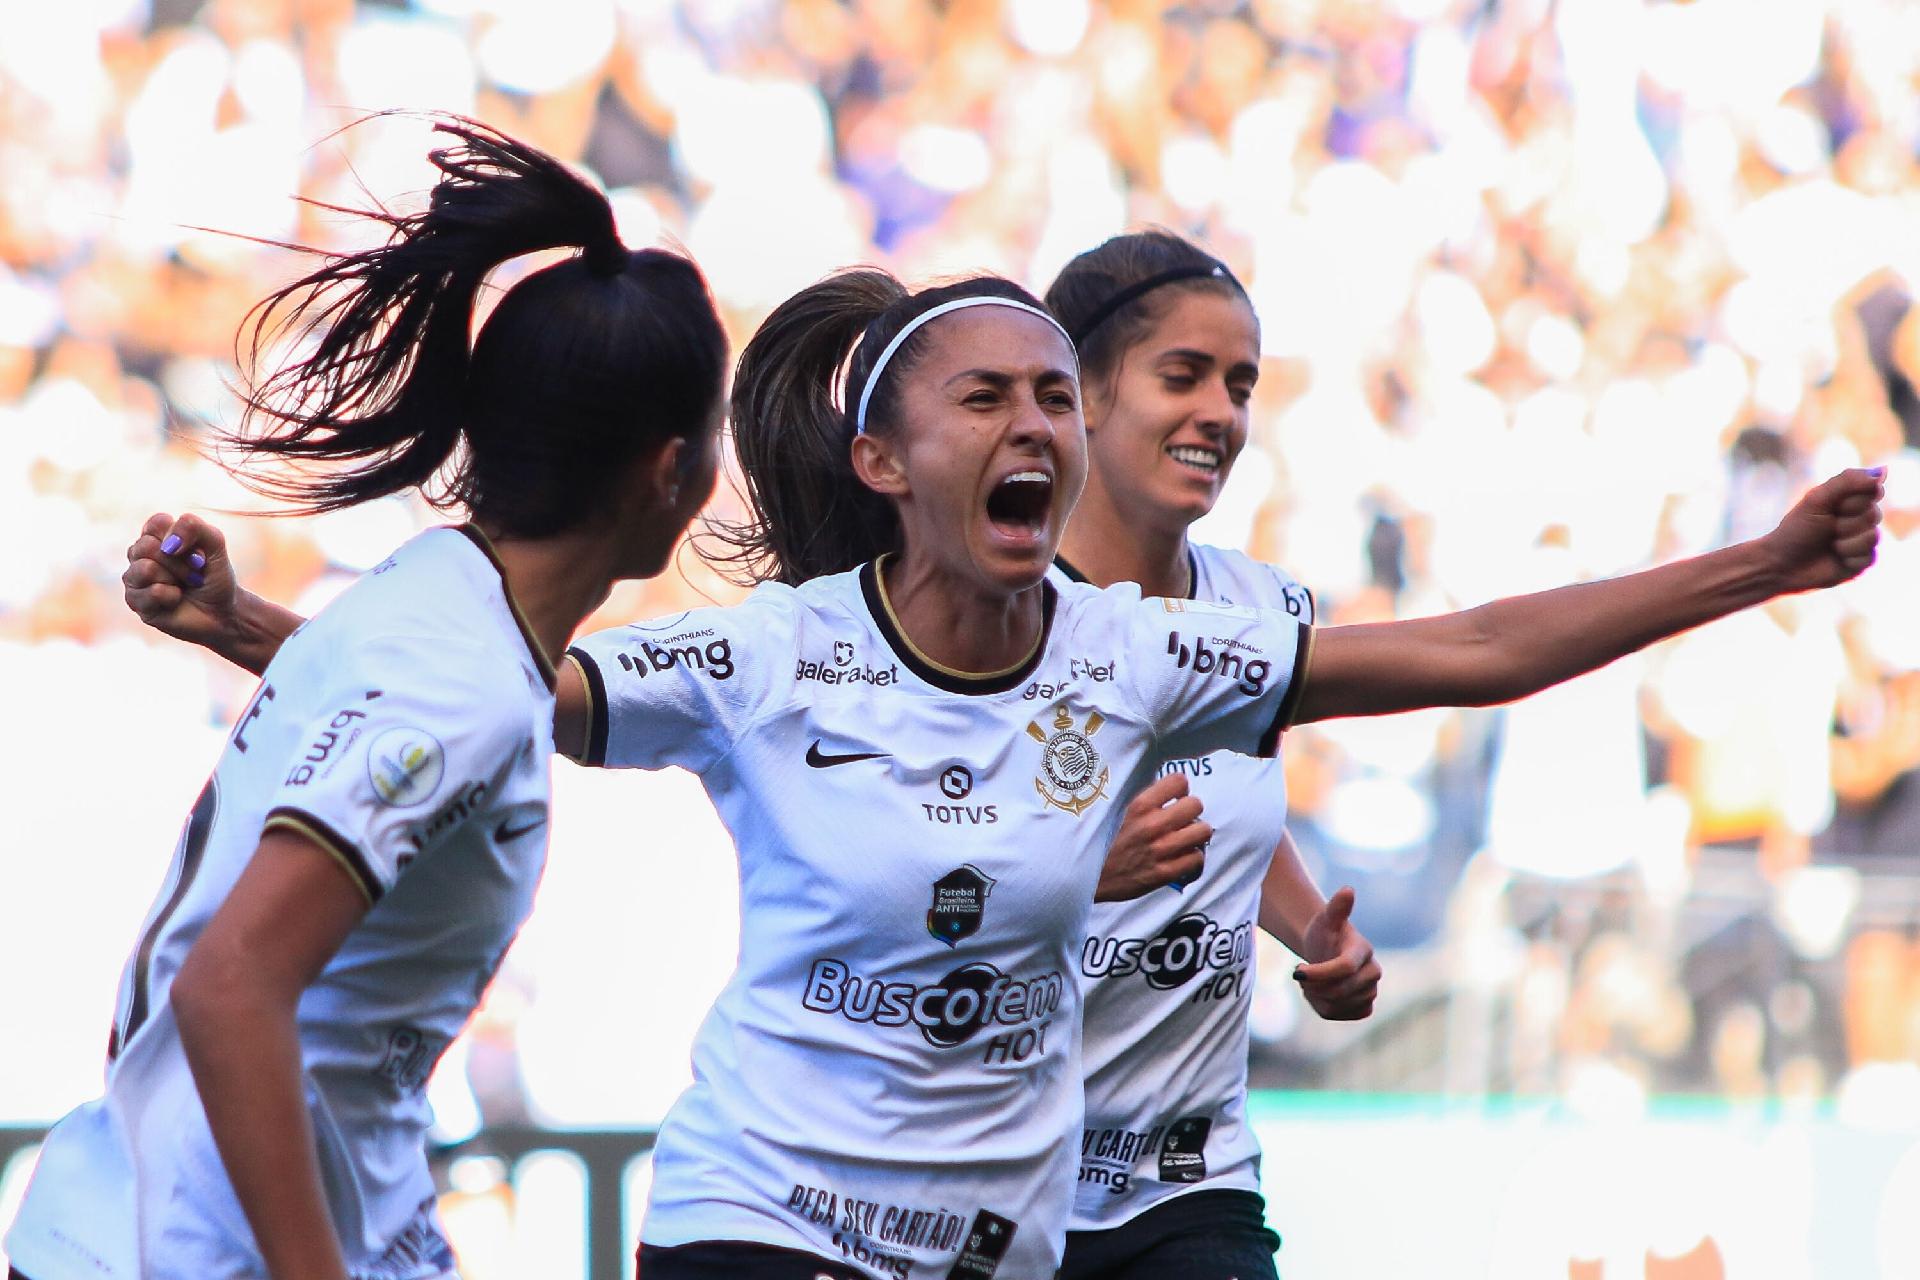 Diany (#8 Corinthians) during the Campeonato Paulista Feminino football  match between Sao Jose EC and